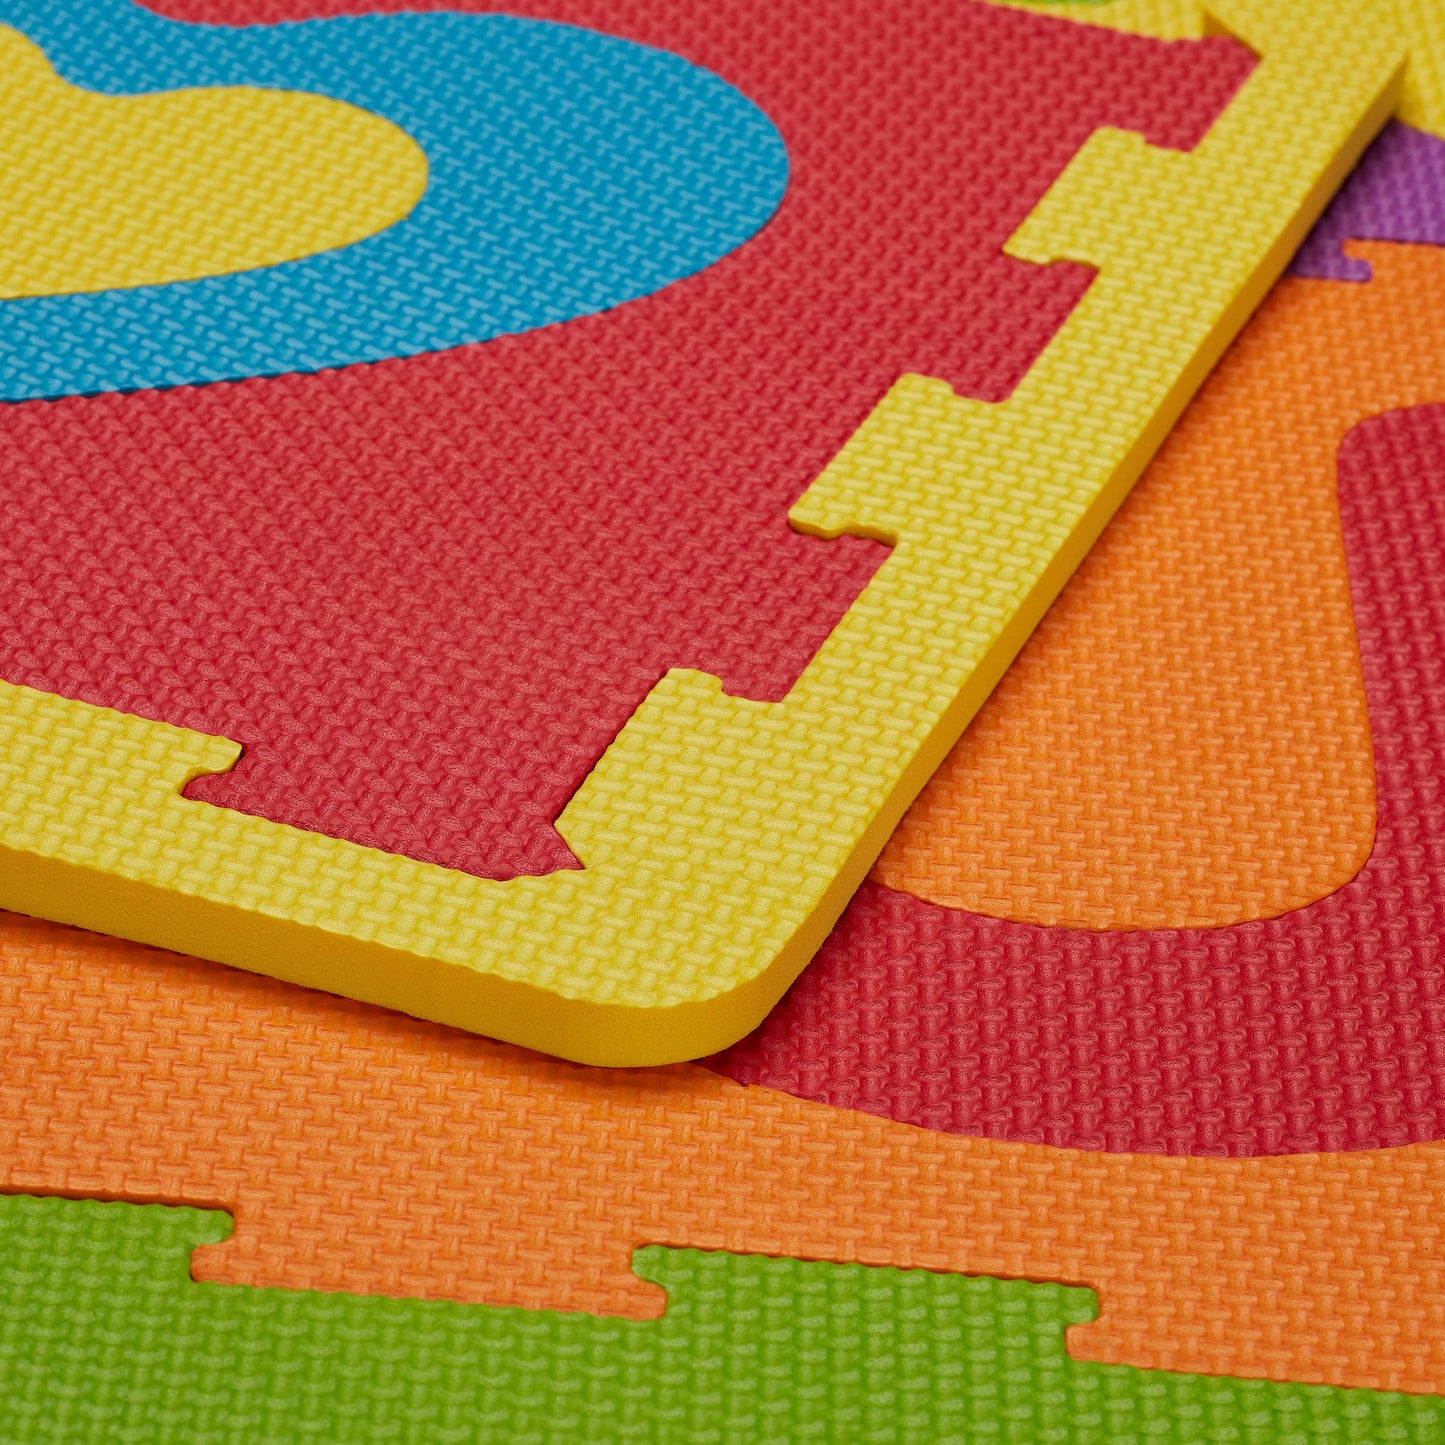 Spark. Create. Imagine. ABC Foam Playmat Learning Toy Set, 28 Pieces